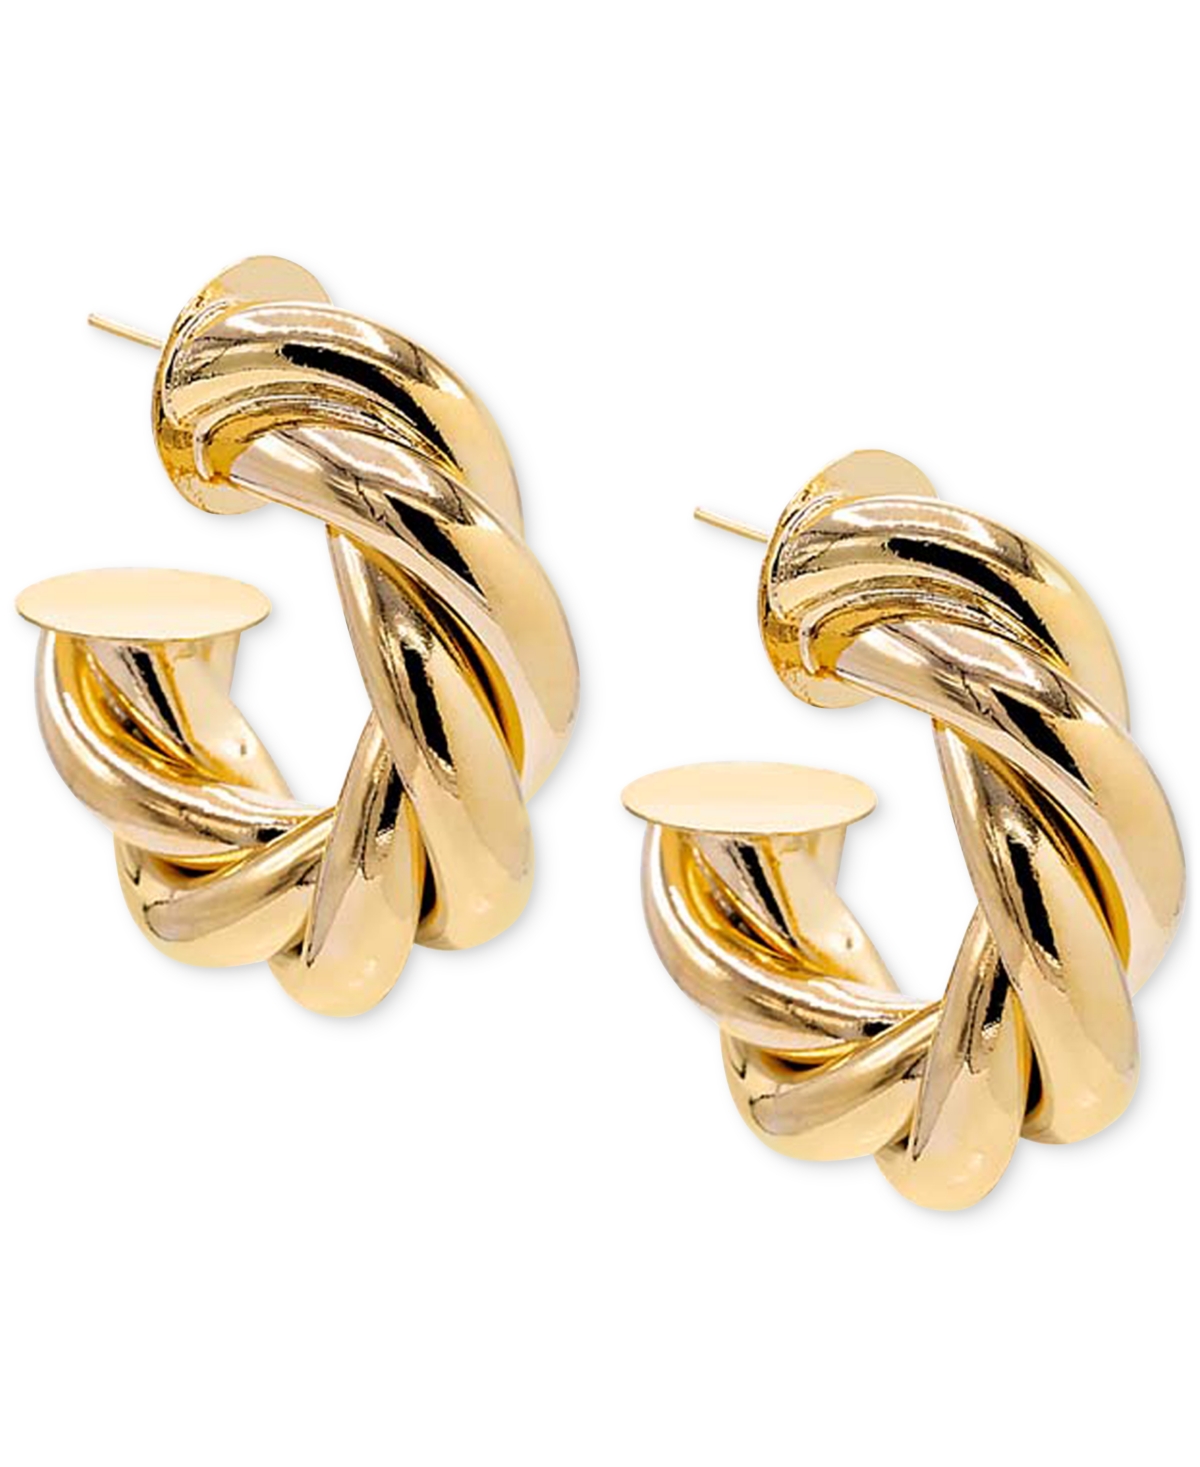 By Adina Eden 14k Gold-plated Medium Wide Twisted Rope Hoop Earrings, 1.45"